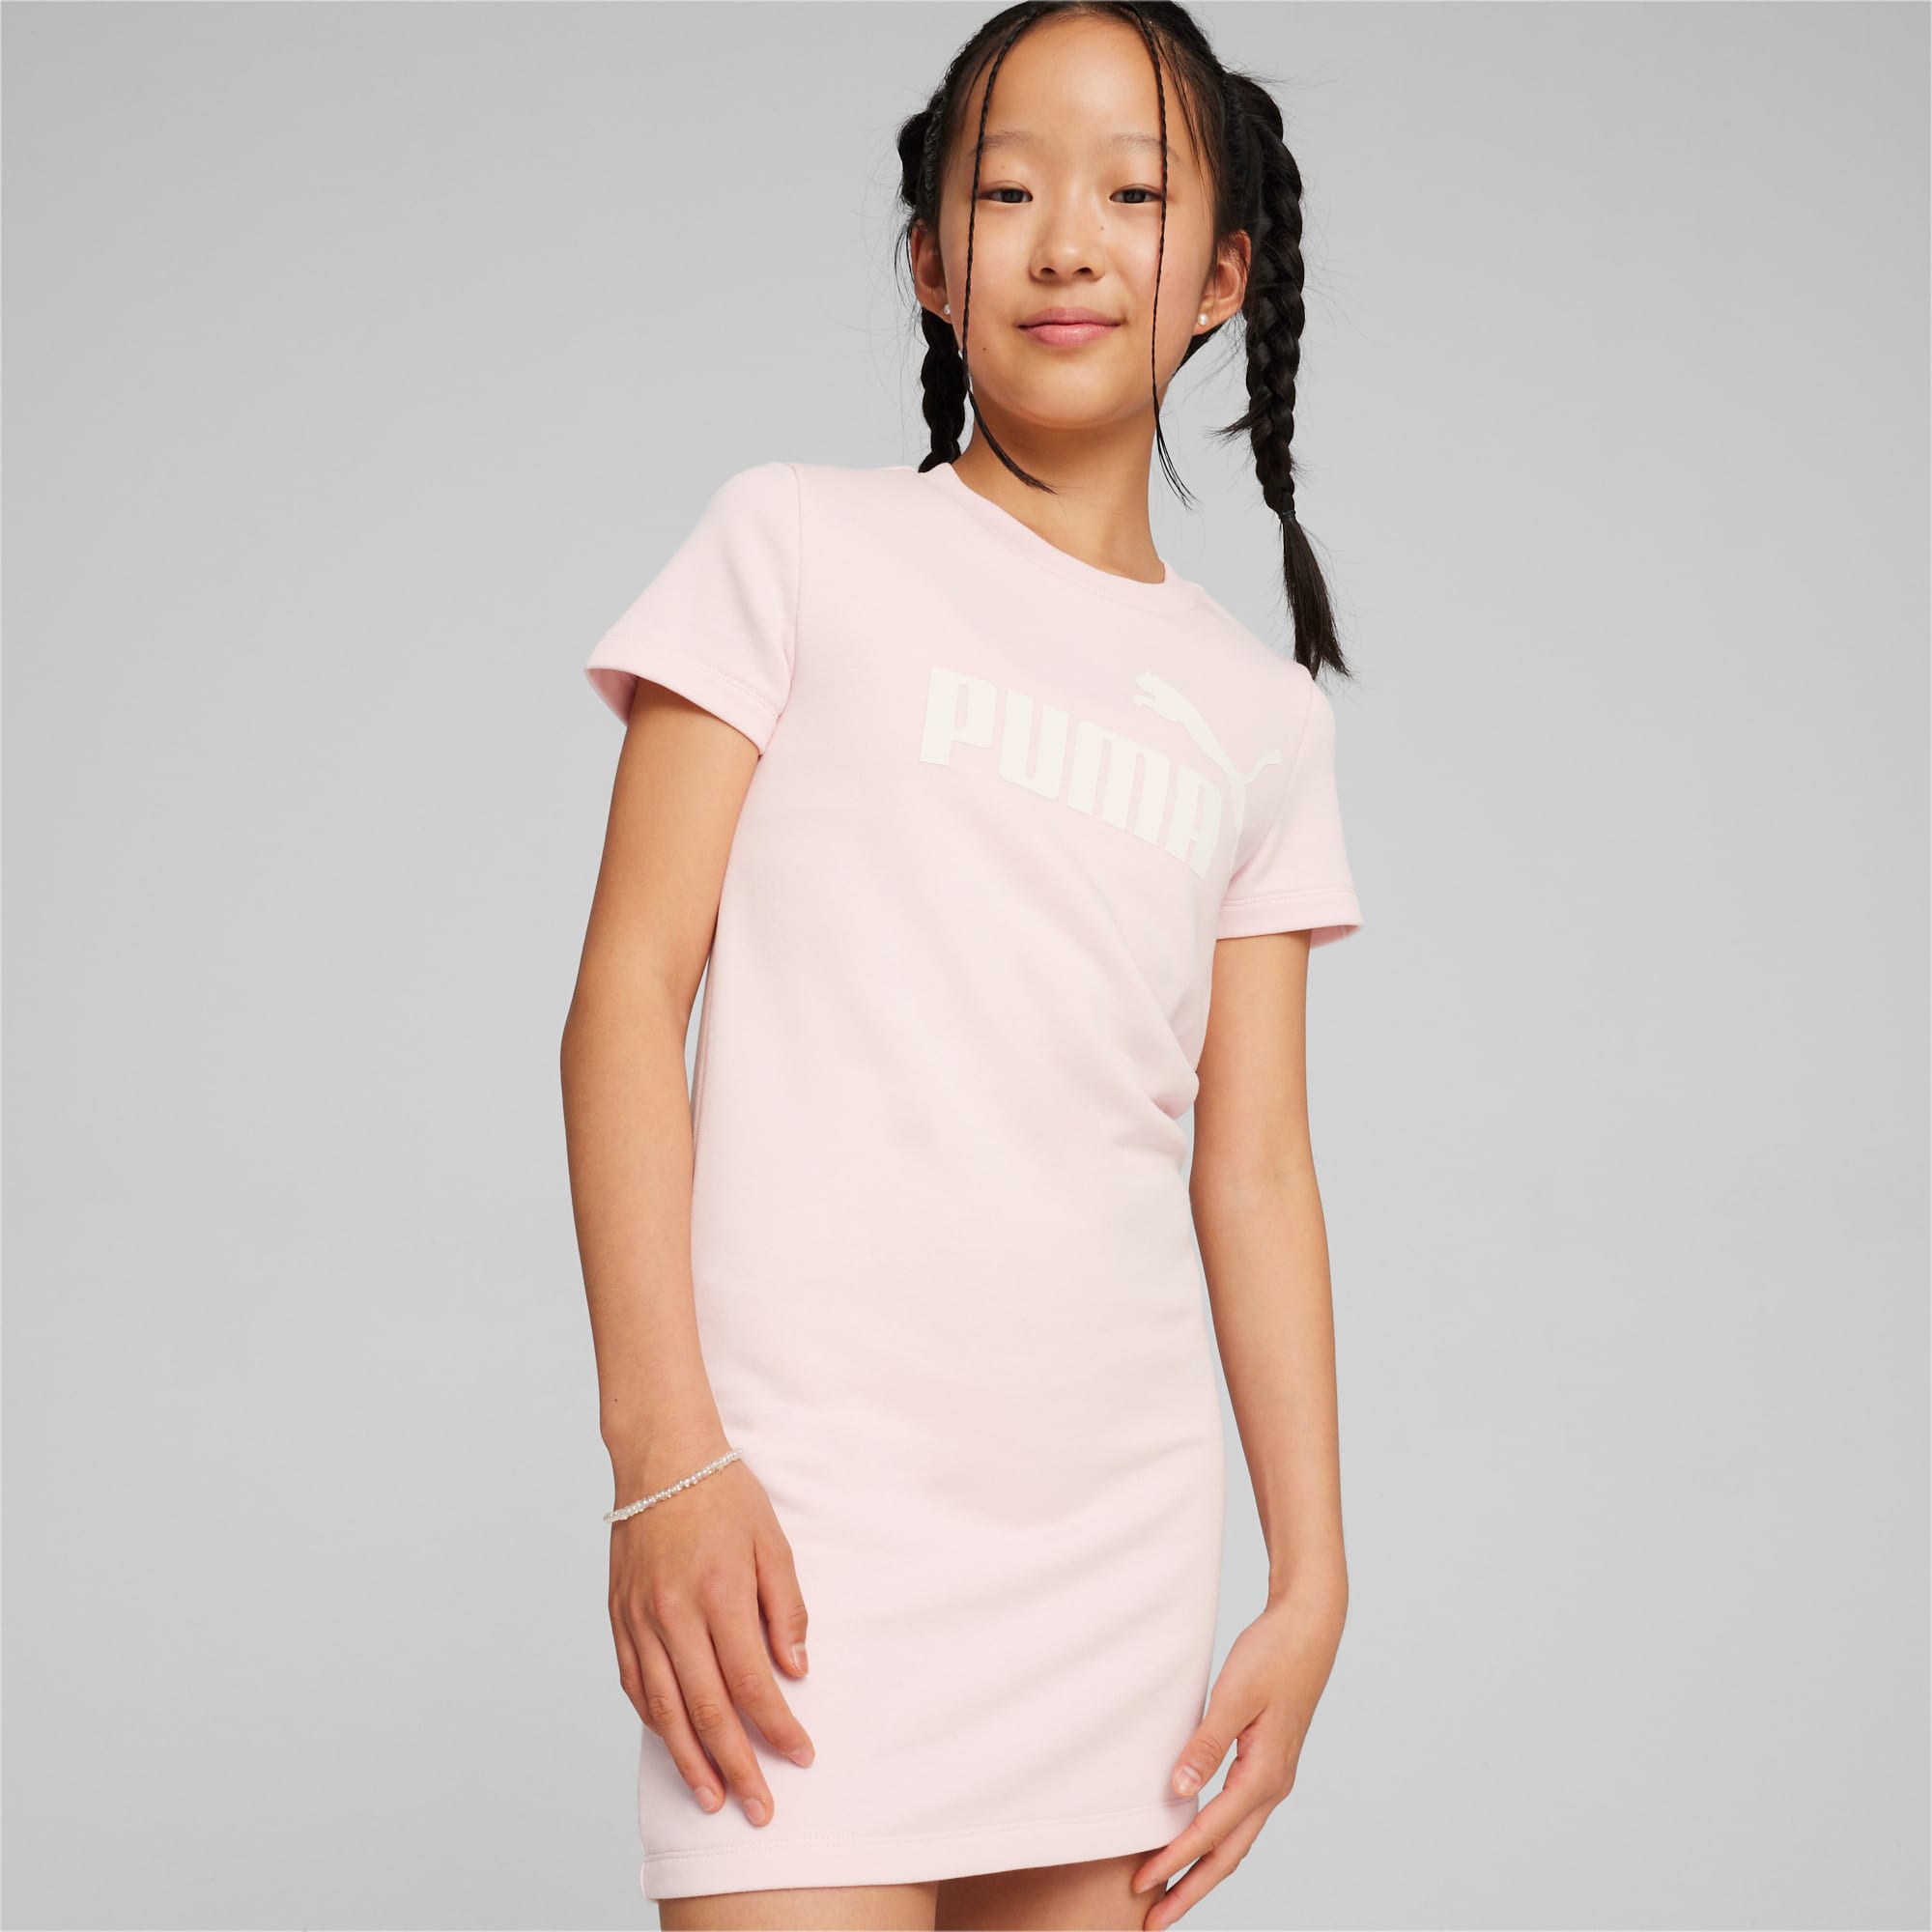 PUMA Robe à Capuche Essentials+ Logo Enfant Et Adolescent, Rose/Blanc